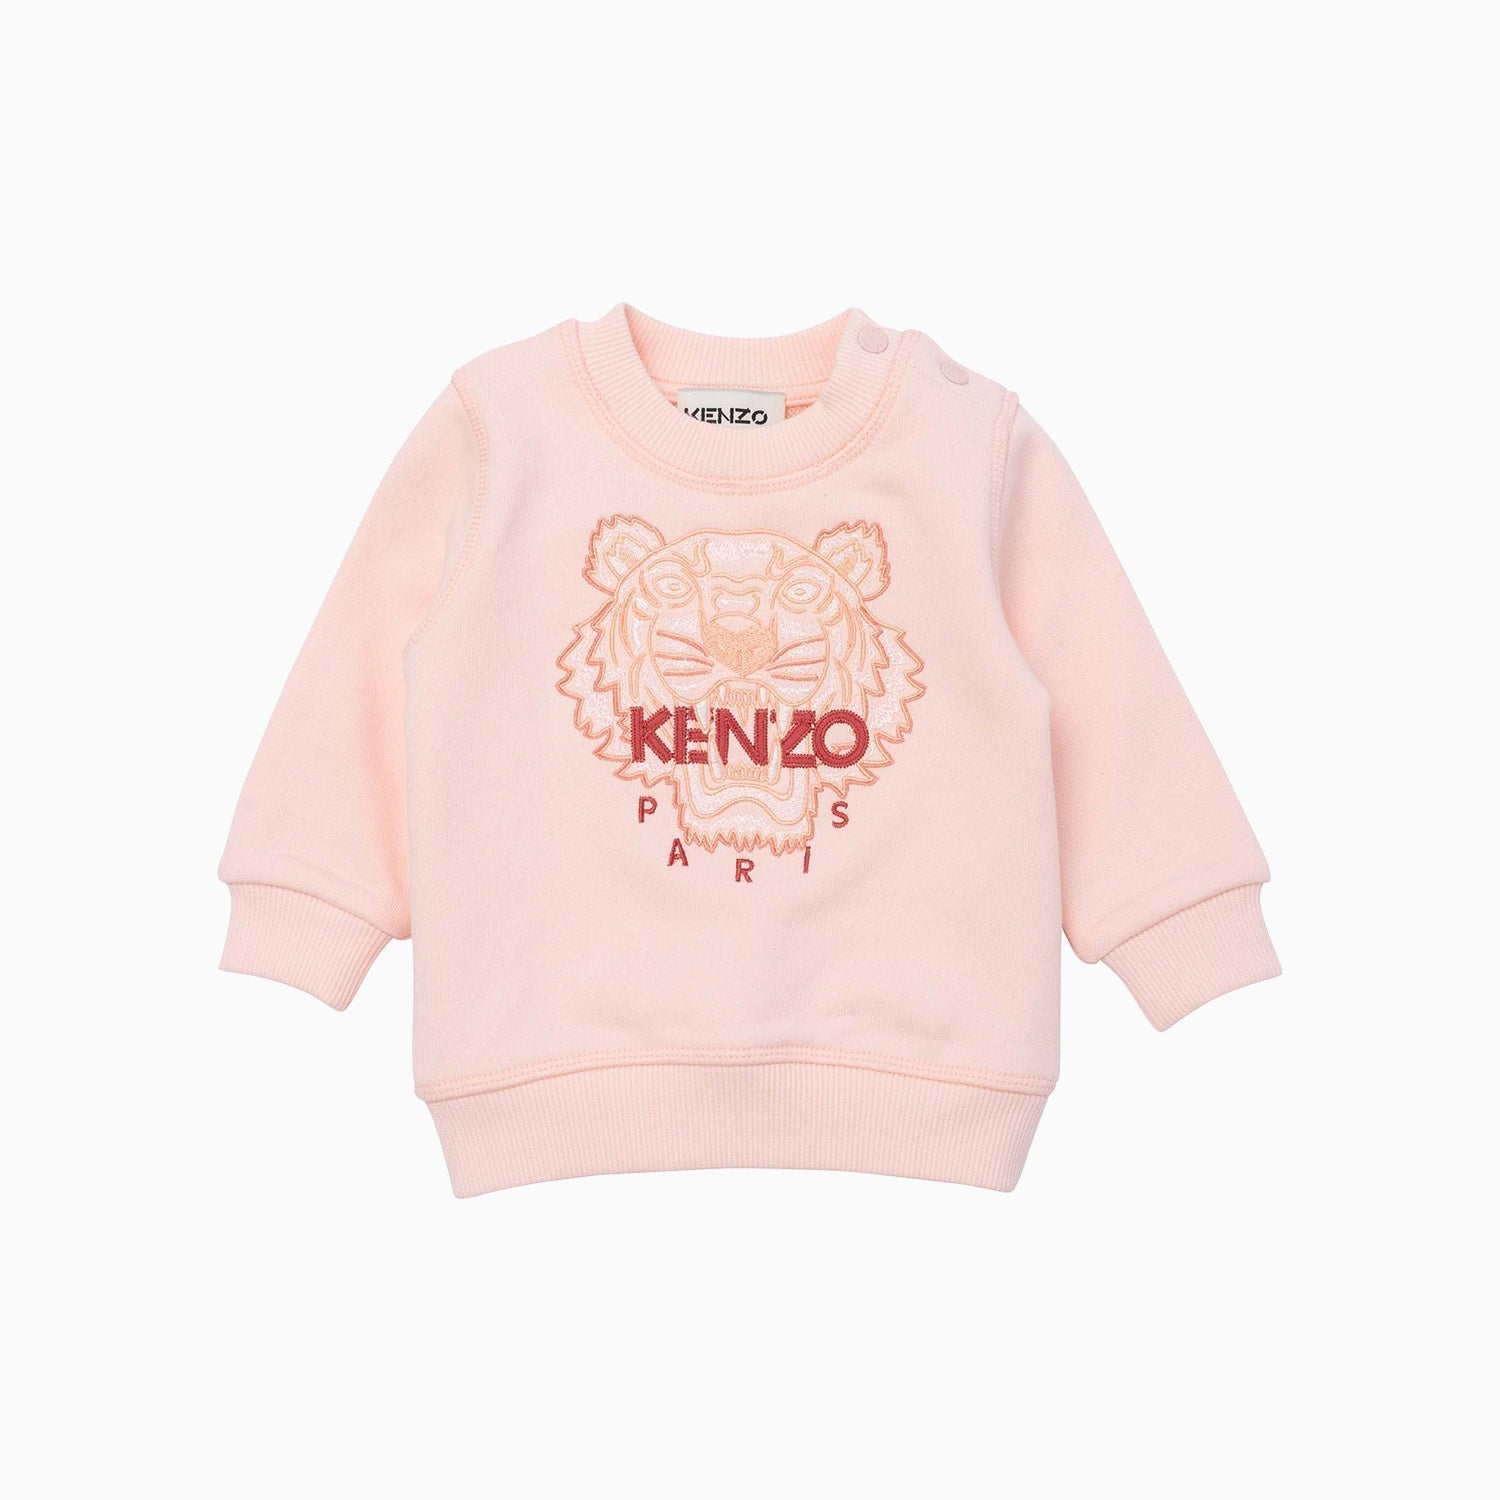 kenzo-kids-logo-printed-sweatshirt-k05082-477